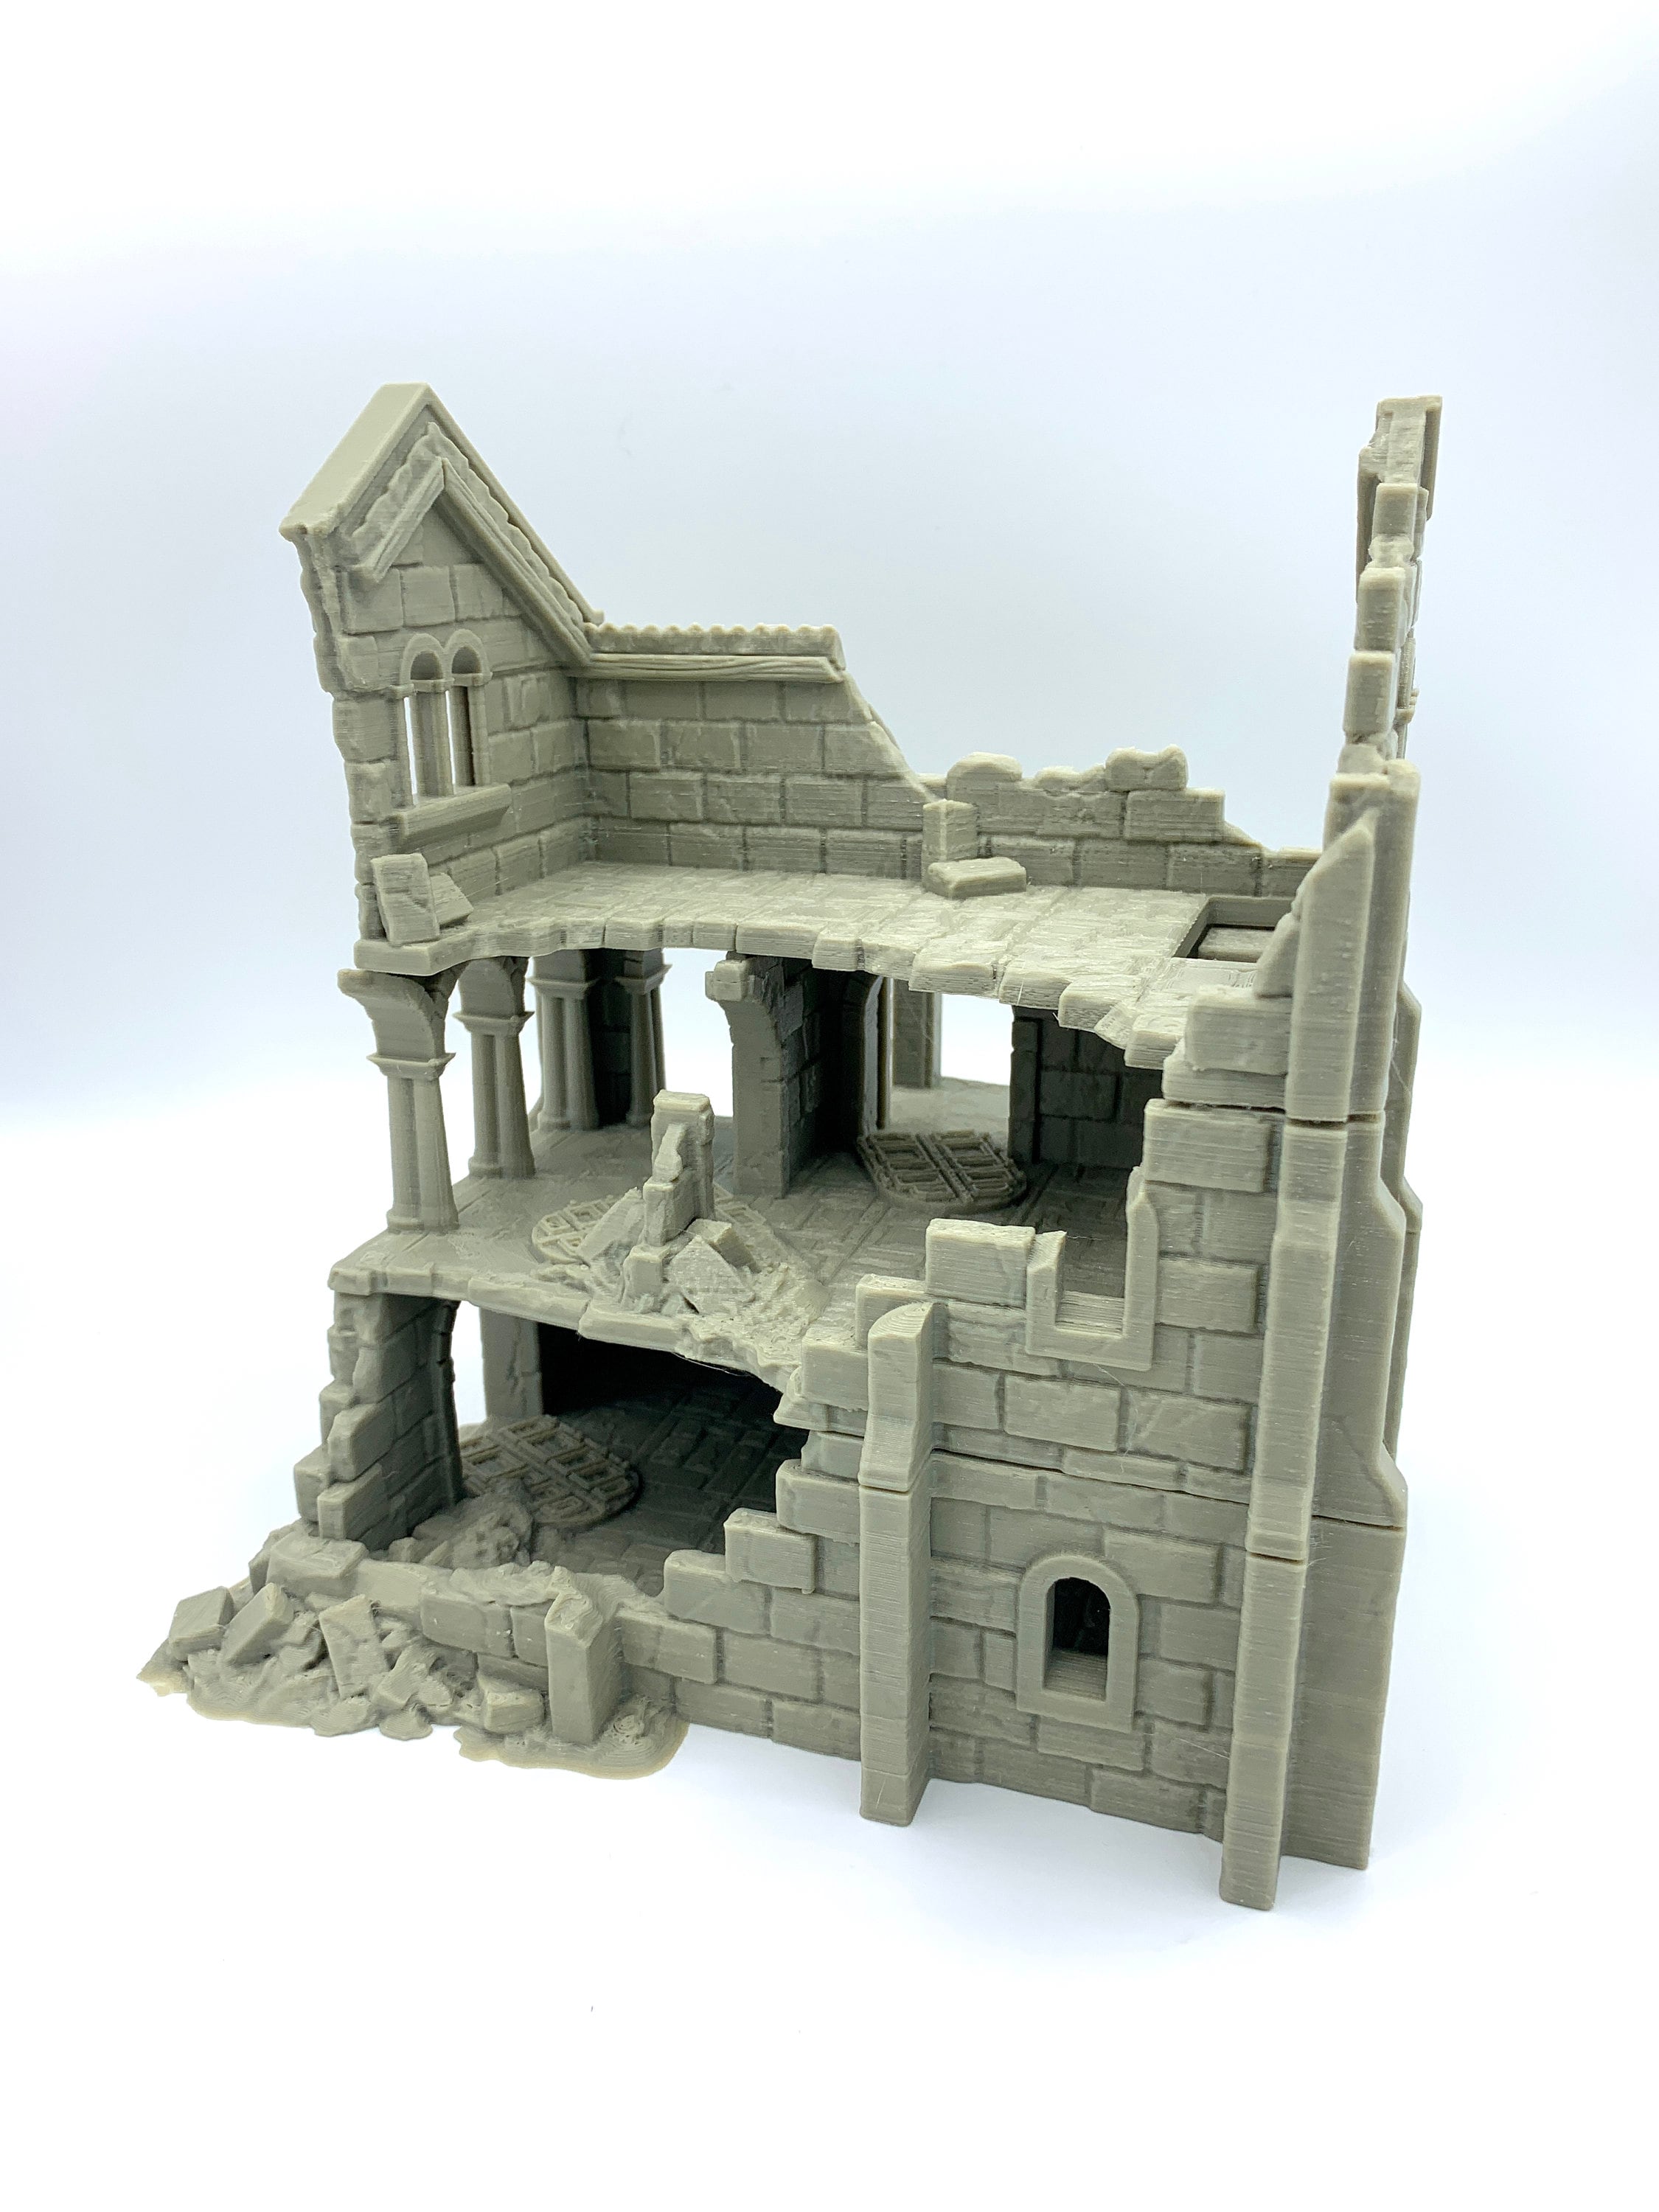 Arkenfel Ruined House 5 / Dark Realms Terrain / RPG and Wargame 3d Printed Tabletop Terrain / Licensed Printer